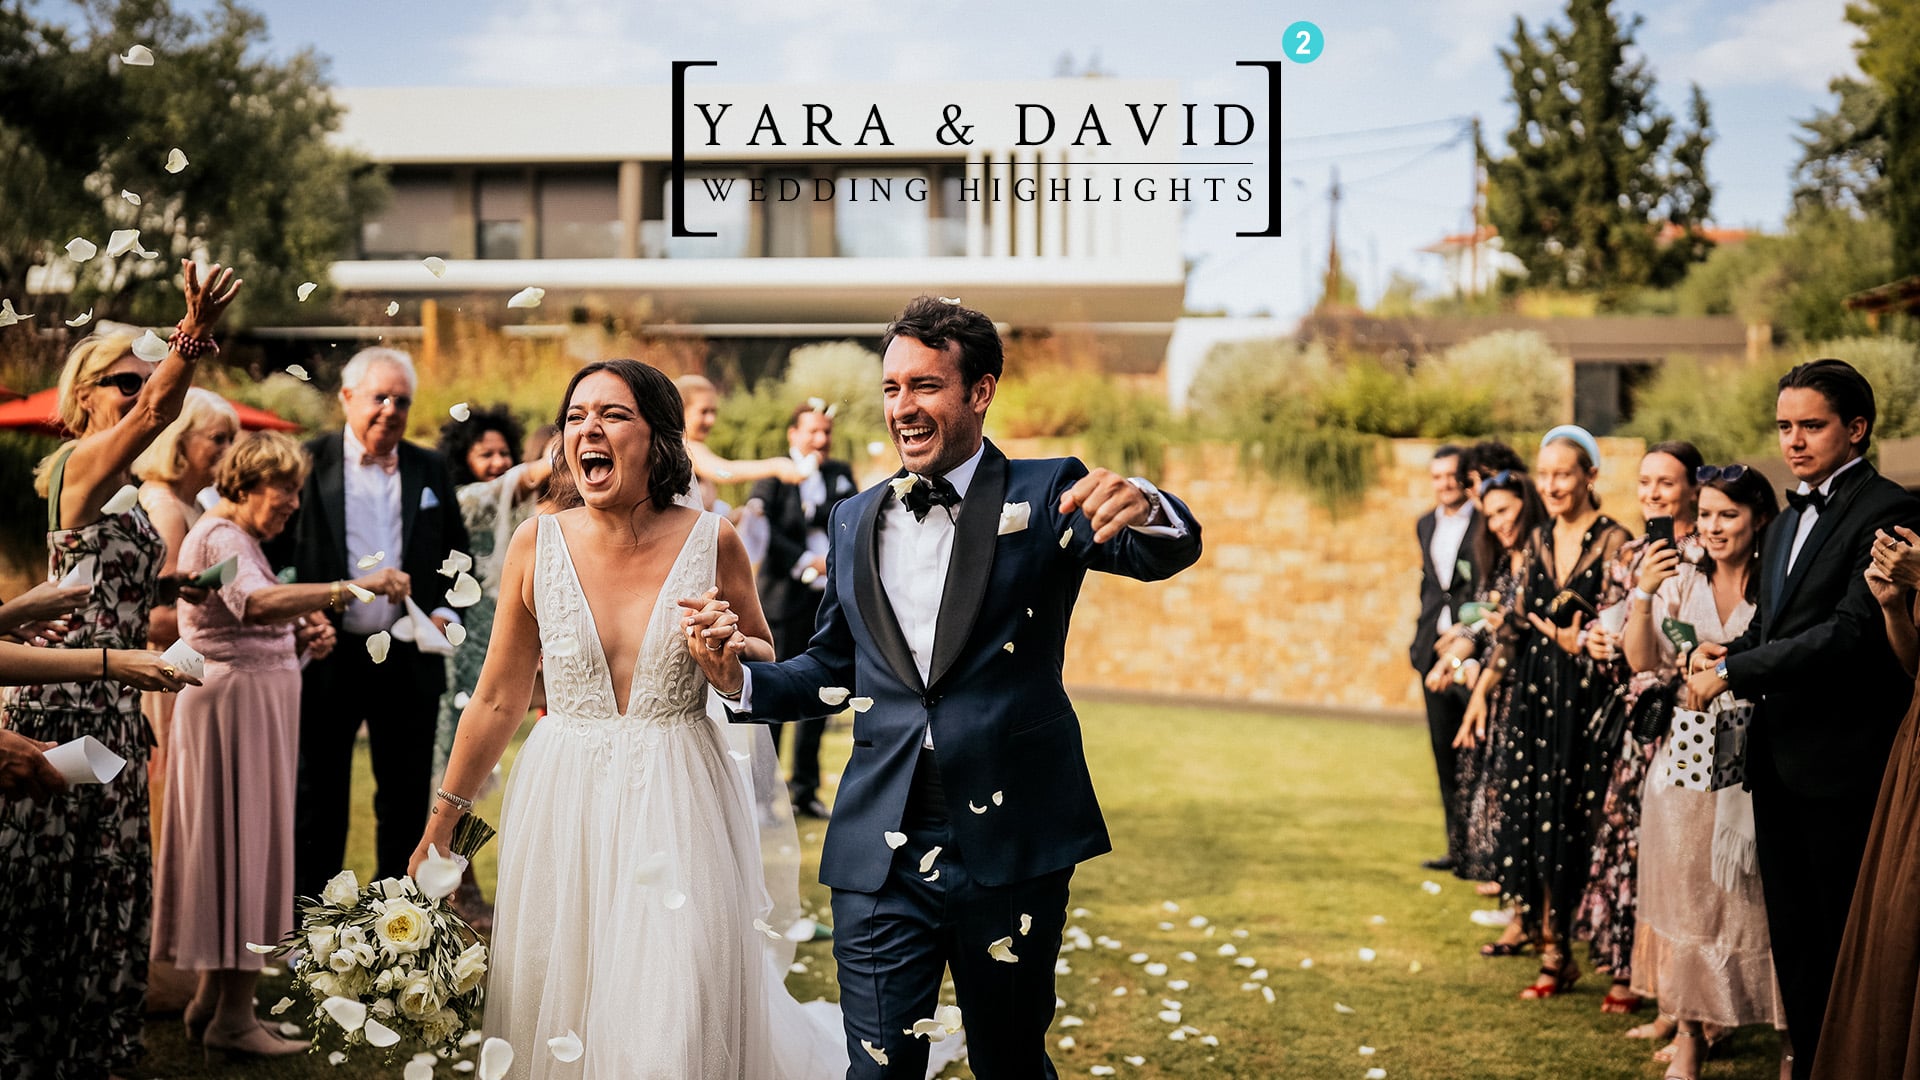 Yara & David Wedding @ Halkidiki, Greece